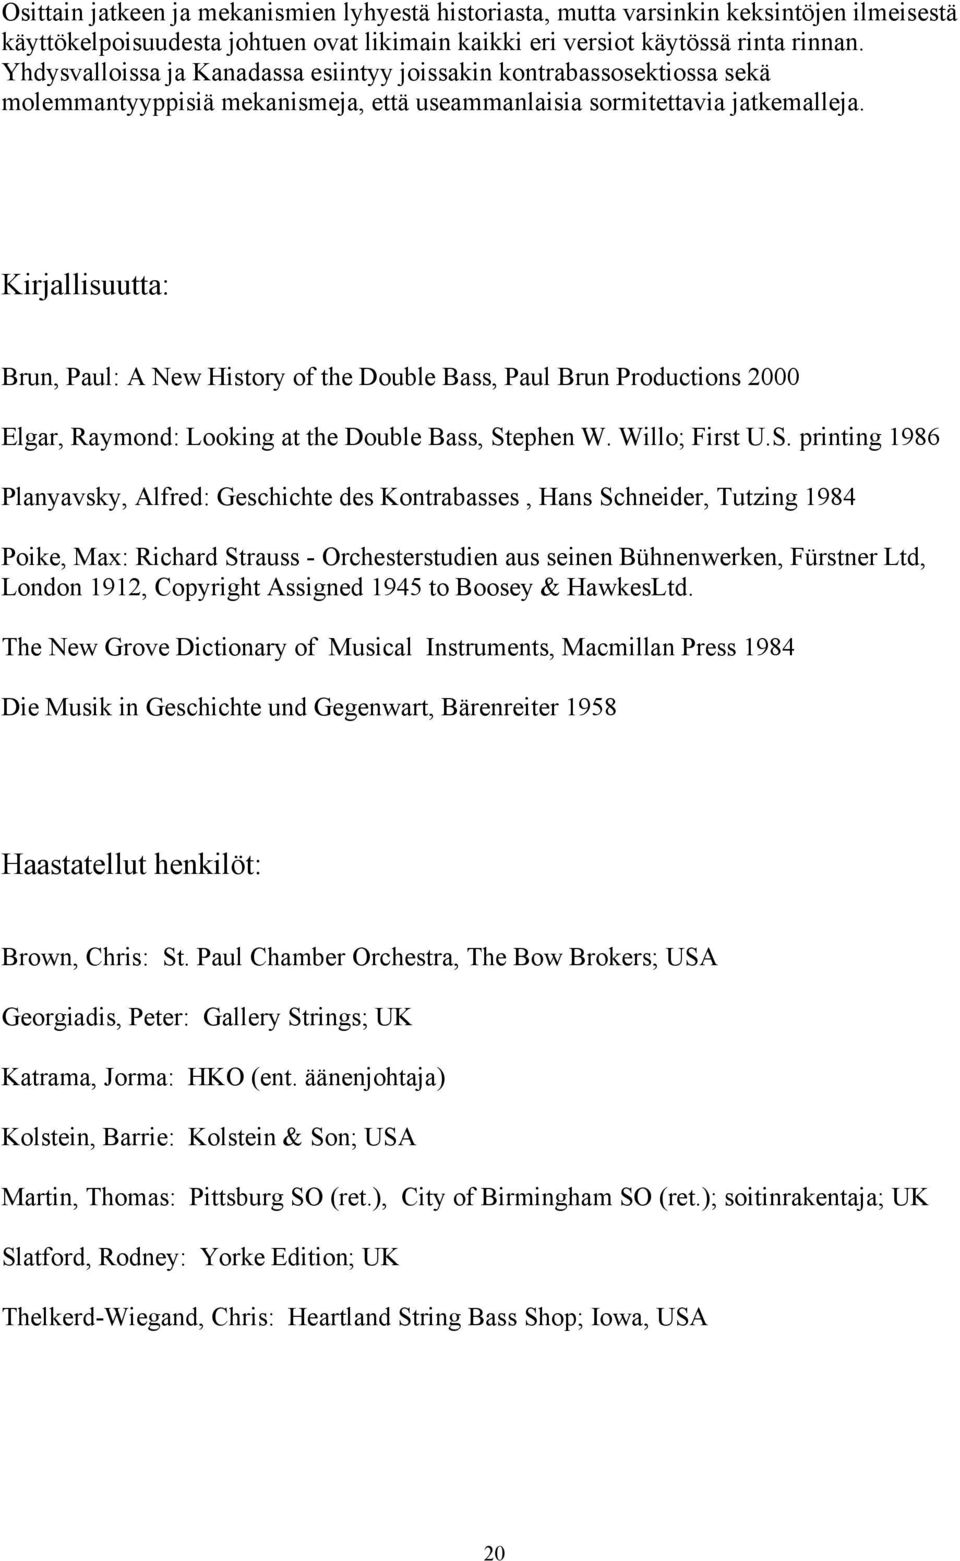 Kirjallisuutta: Brun, Paul: A New History of the Double Bass, Paul Brun Productions 2000 Elgar, Raymond: Looking at the Double Bass, St